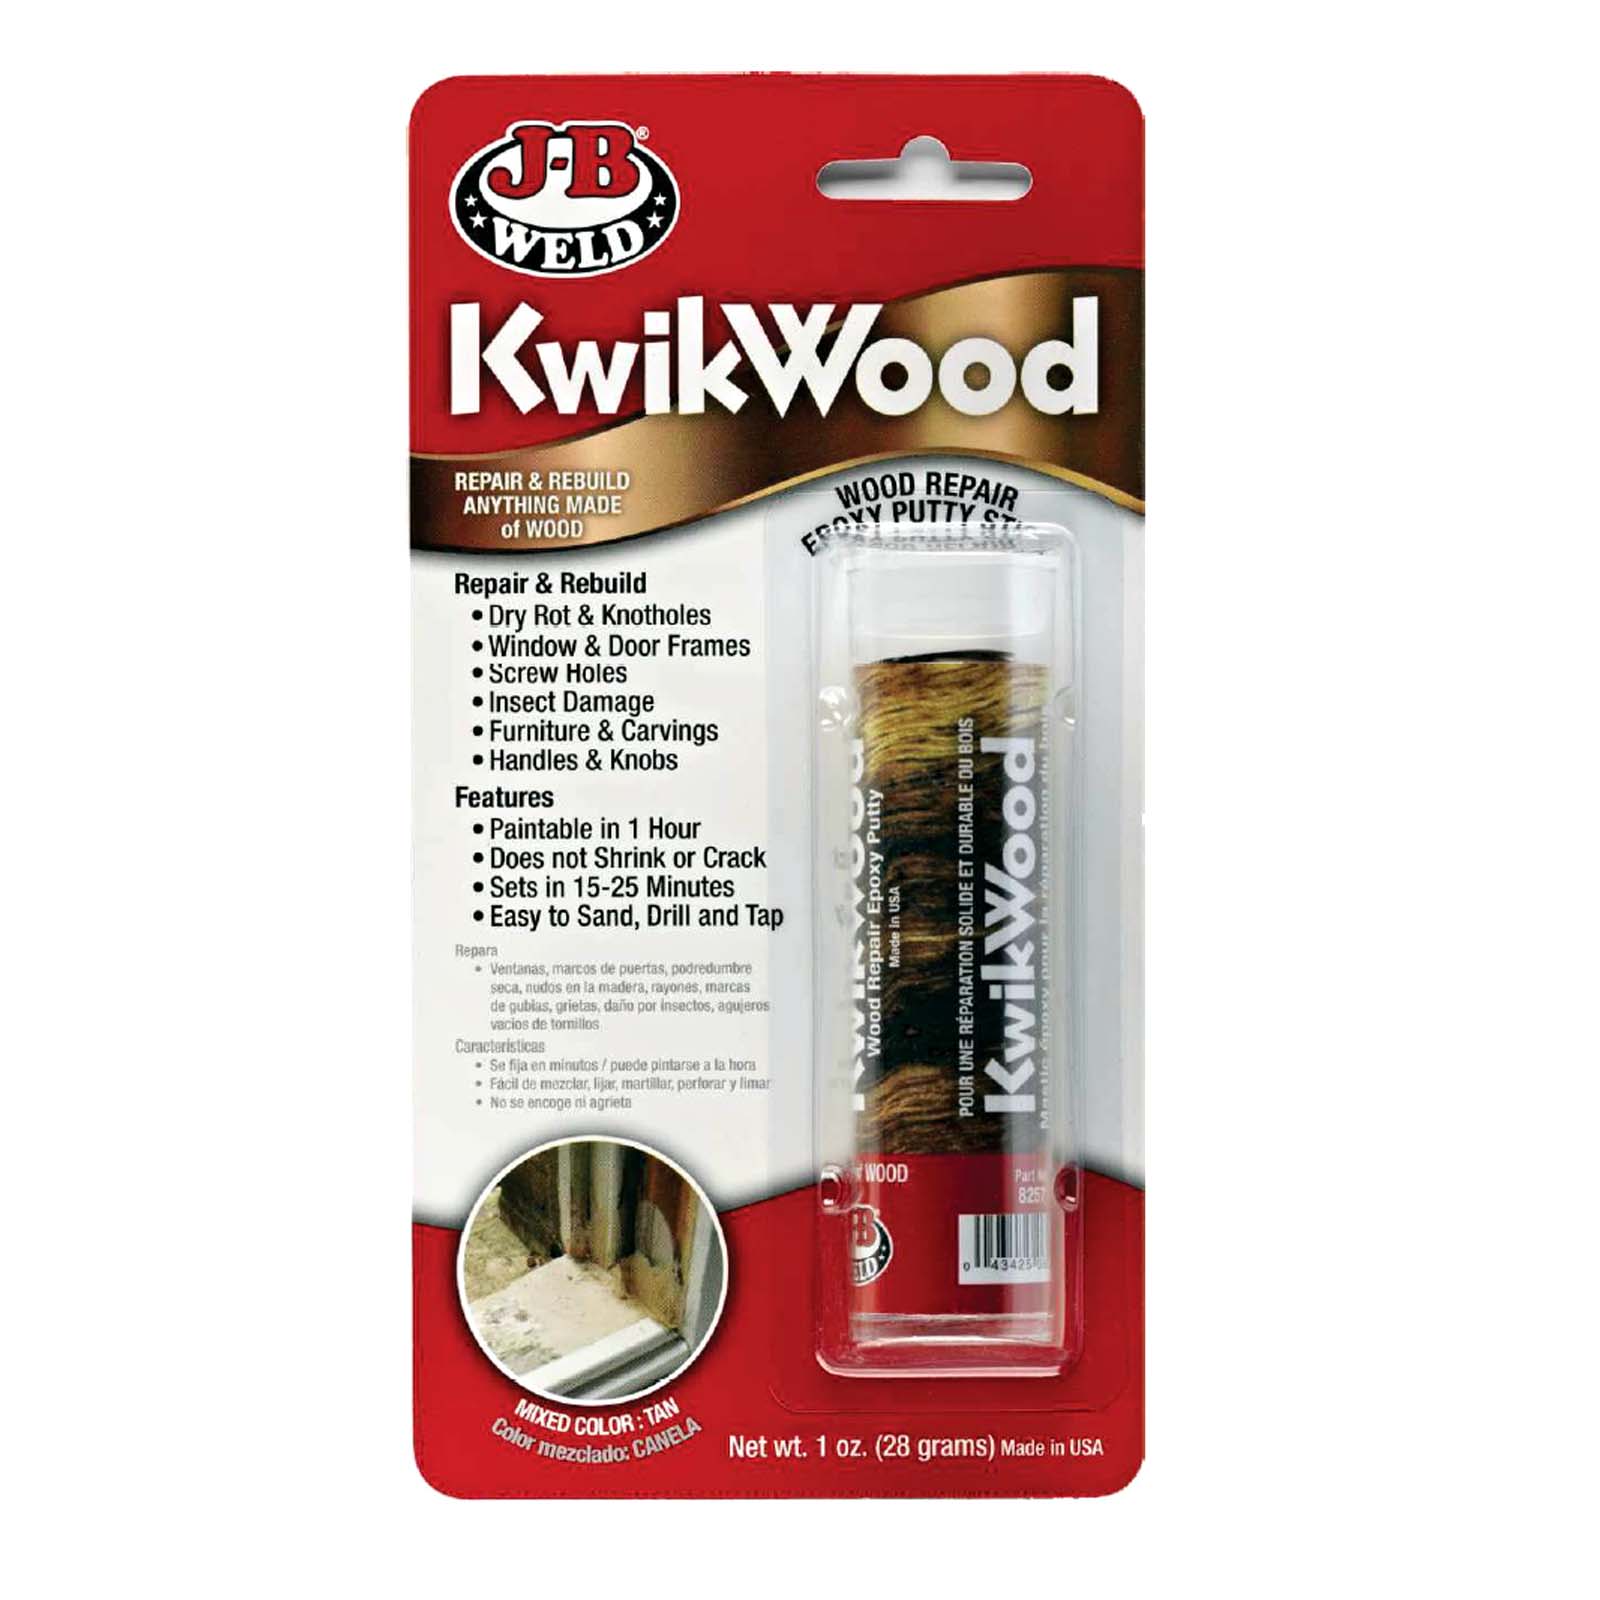 J-B Weld KwikWood Holz Kleber | Reparatur Kleber in Holzfarbe | Kwickwood